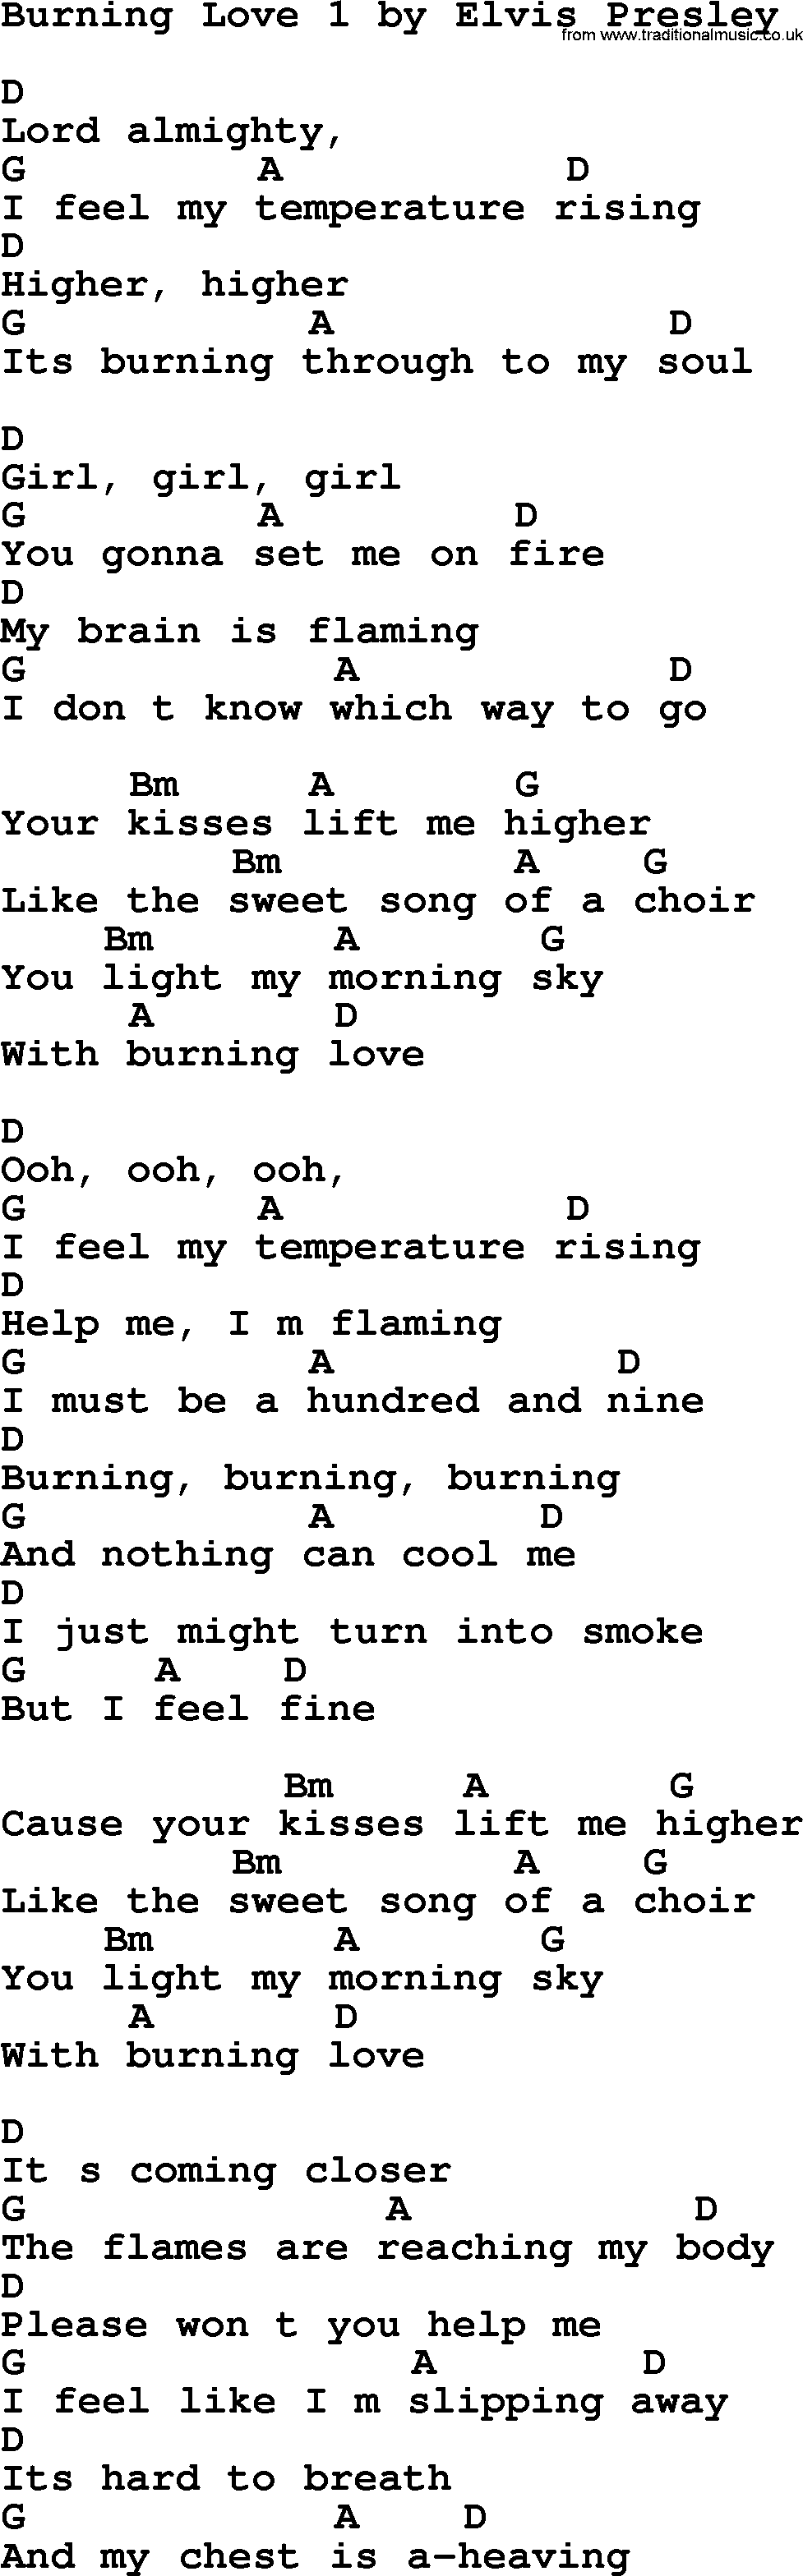 Elvis Presley song: Burning Love 1, lyrics and chords